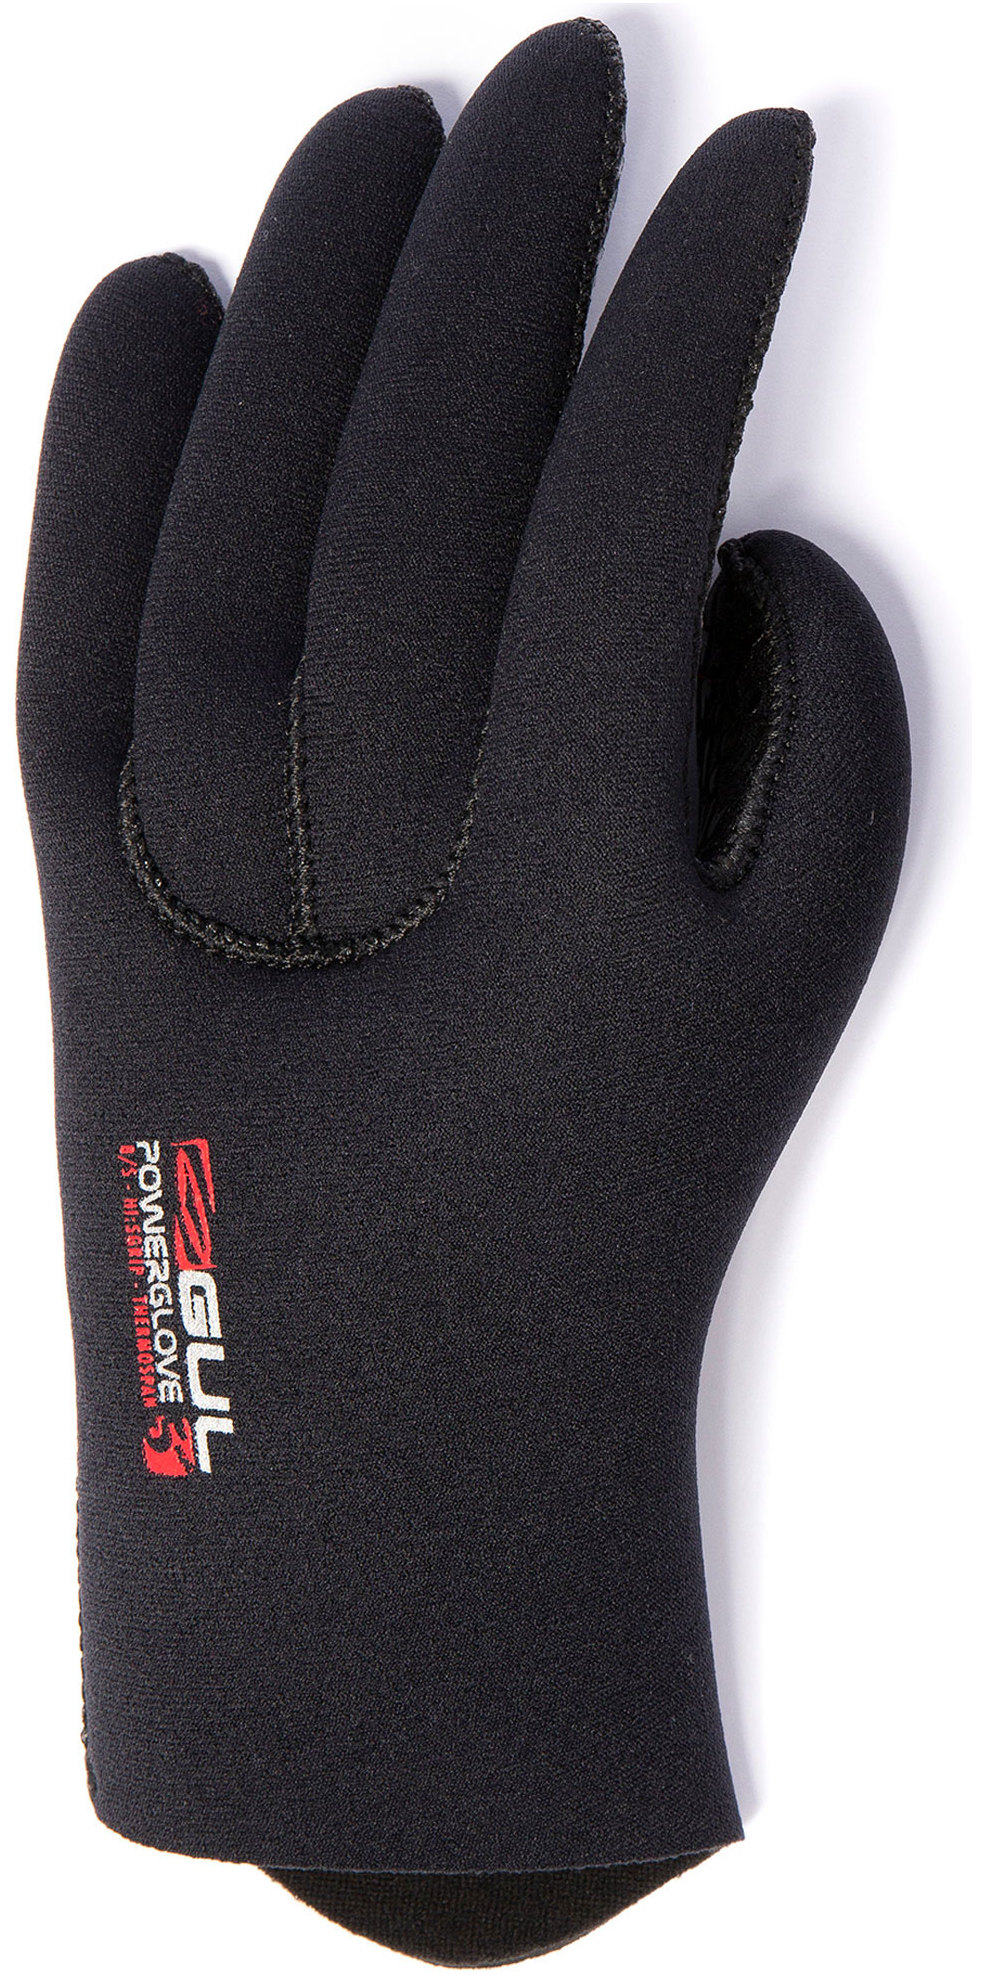 Gul Power 3mm Wetsuit Gloves 2019 Black 